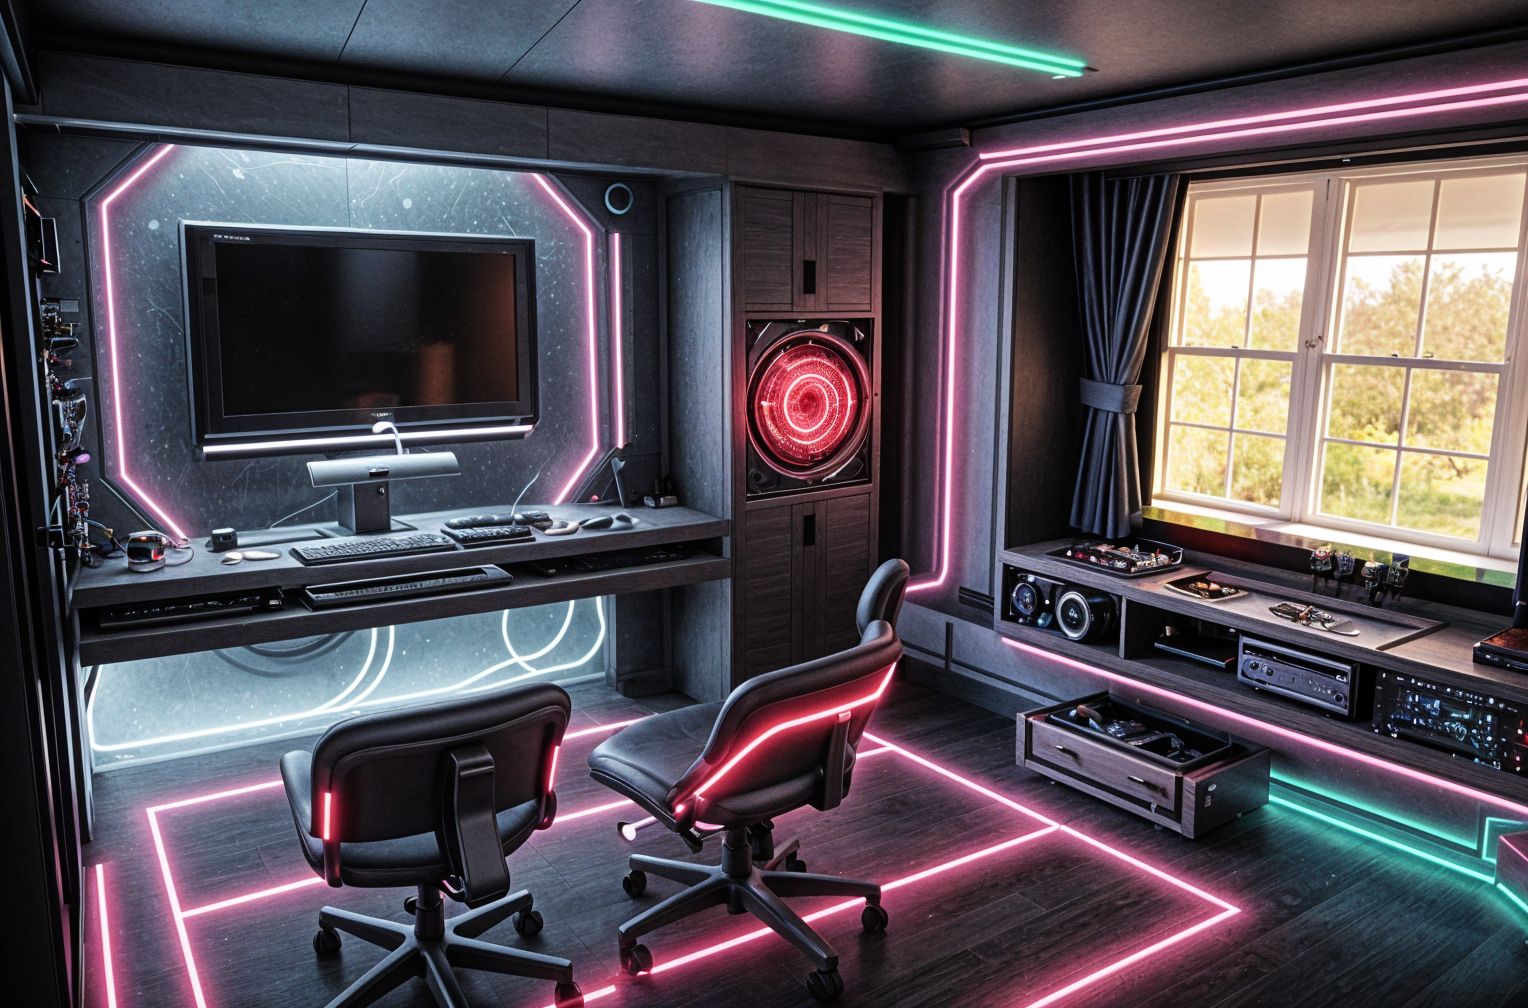 Cyberpunk Gamer Room